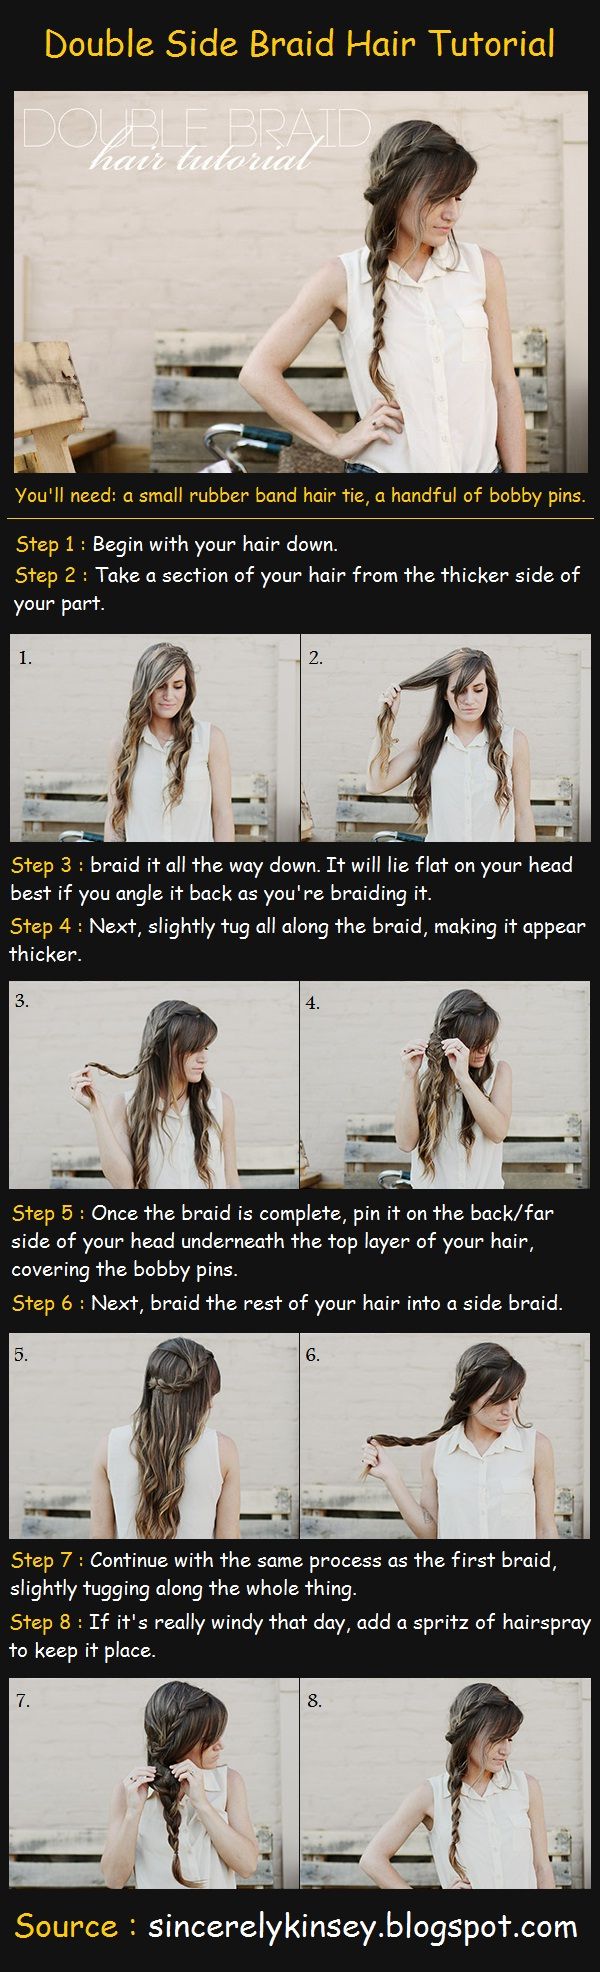 Double Side Braid Hair Tutorial